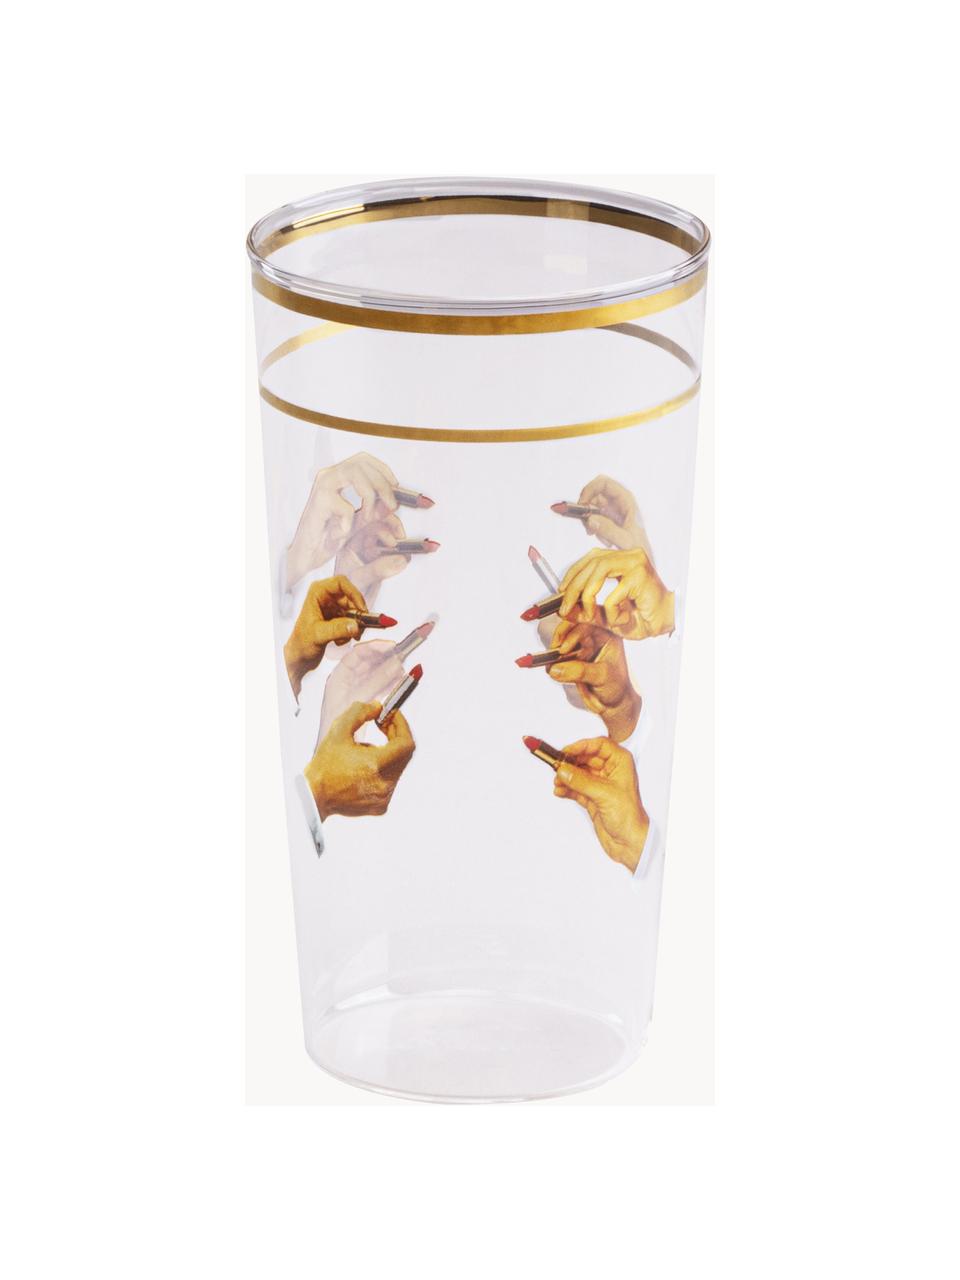 Design waterglas Lipsticks, Decoratie: goudkleurig, Transparant, geel, Ø 7 x H 13 cm, 375 ml